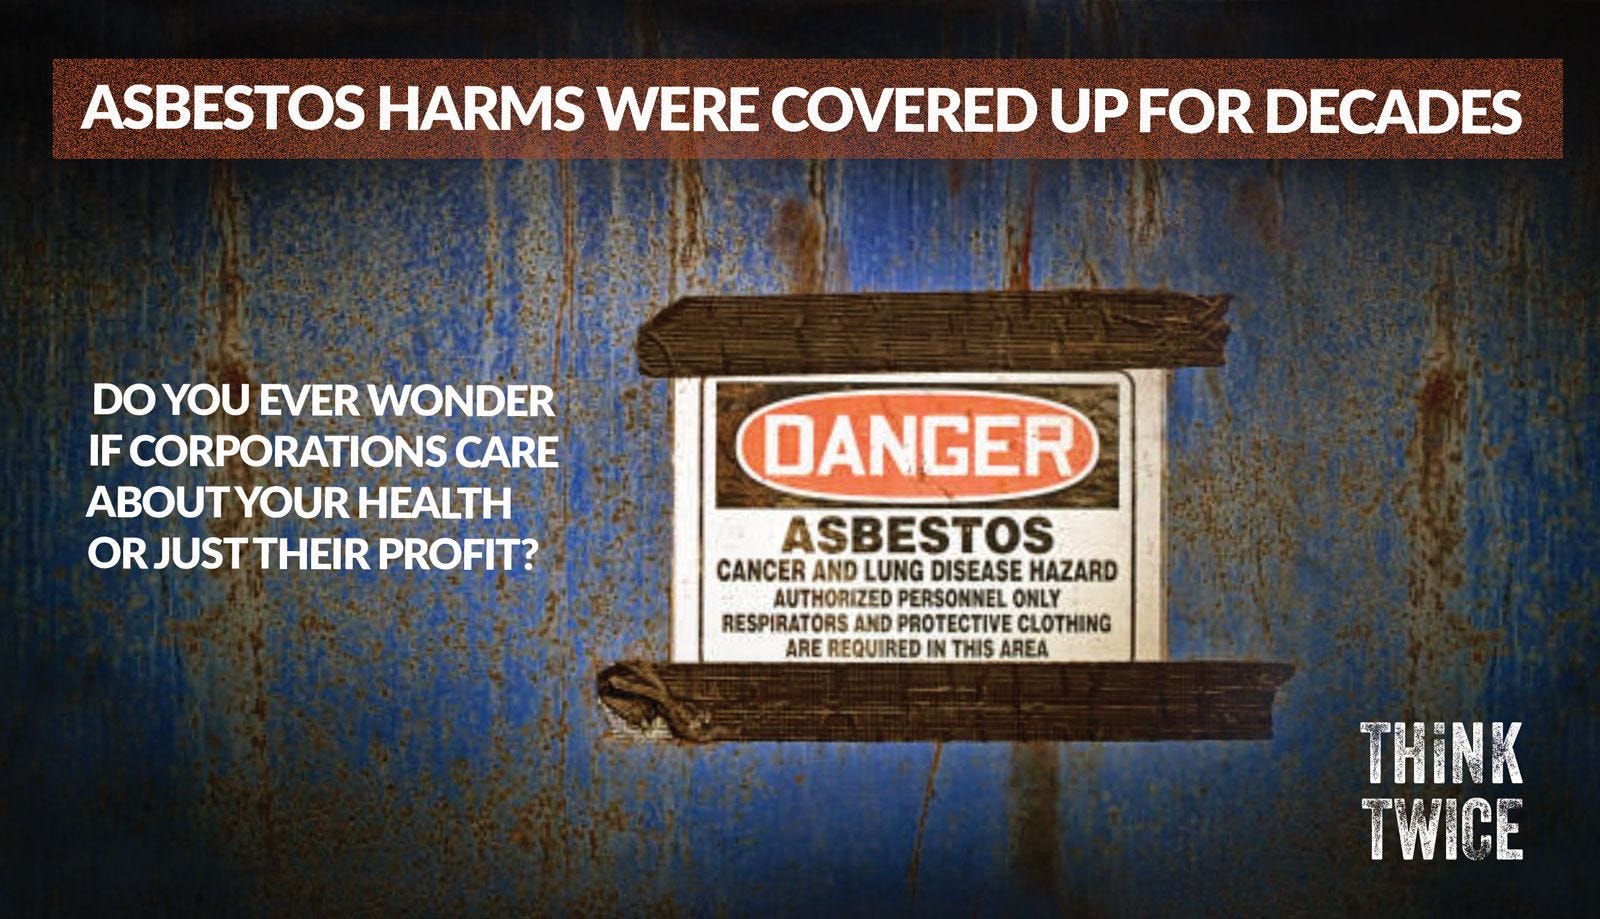 Asbestos harms